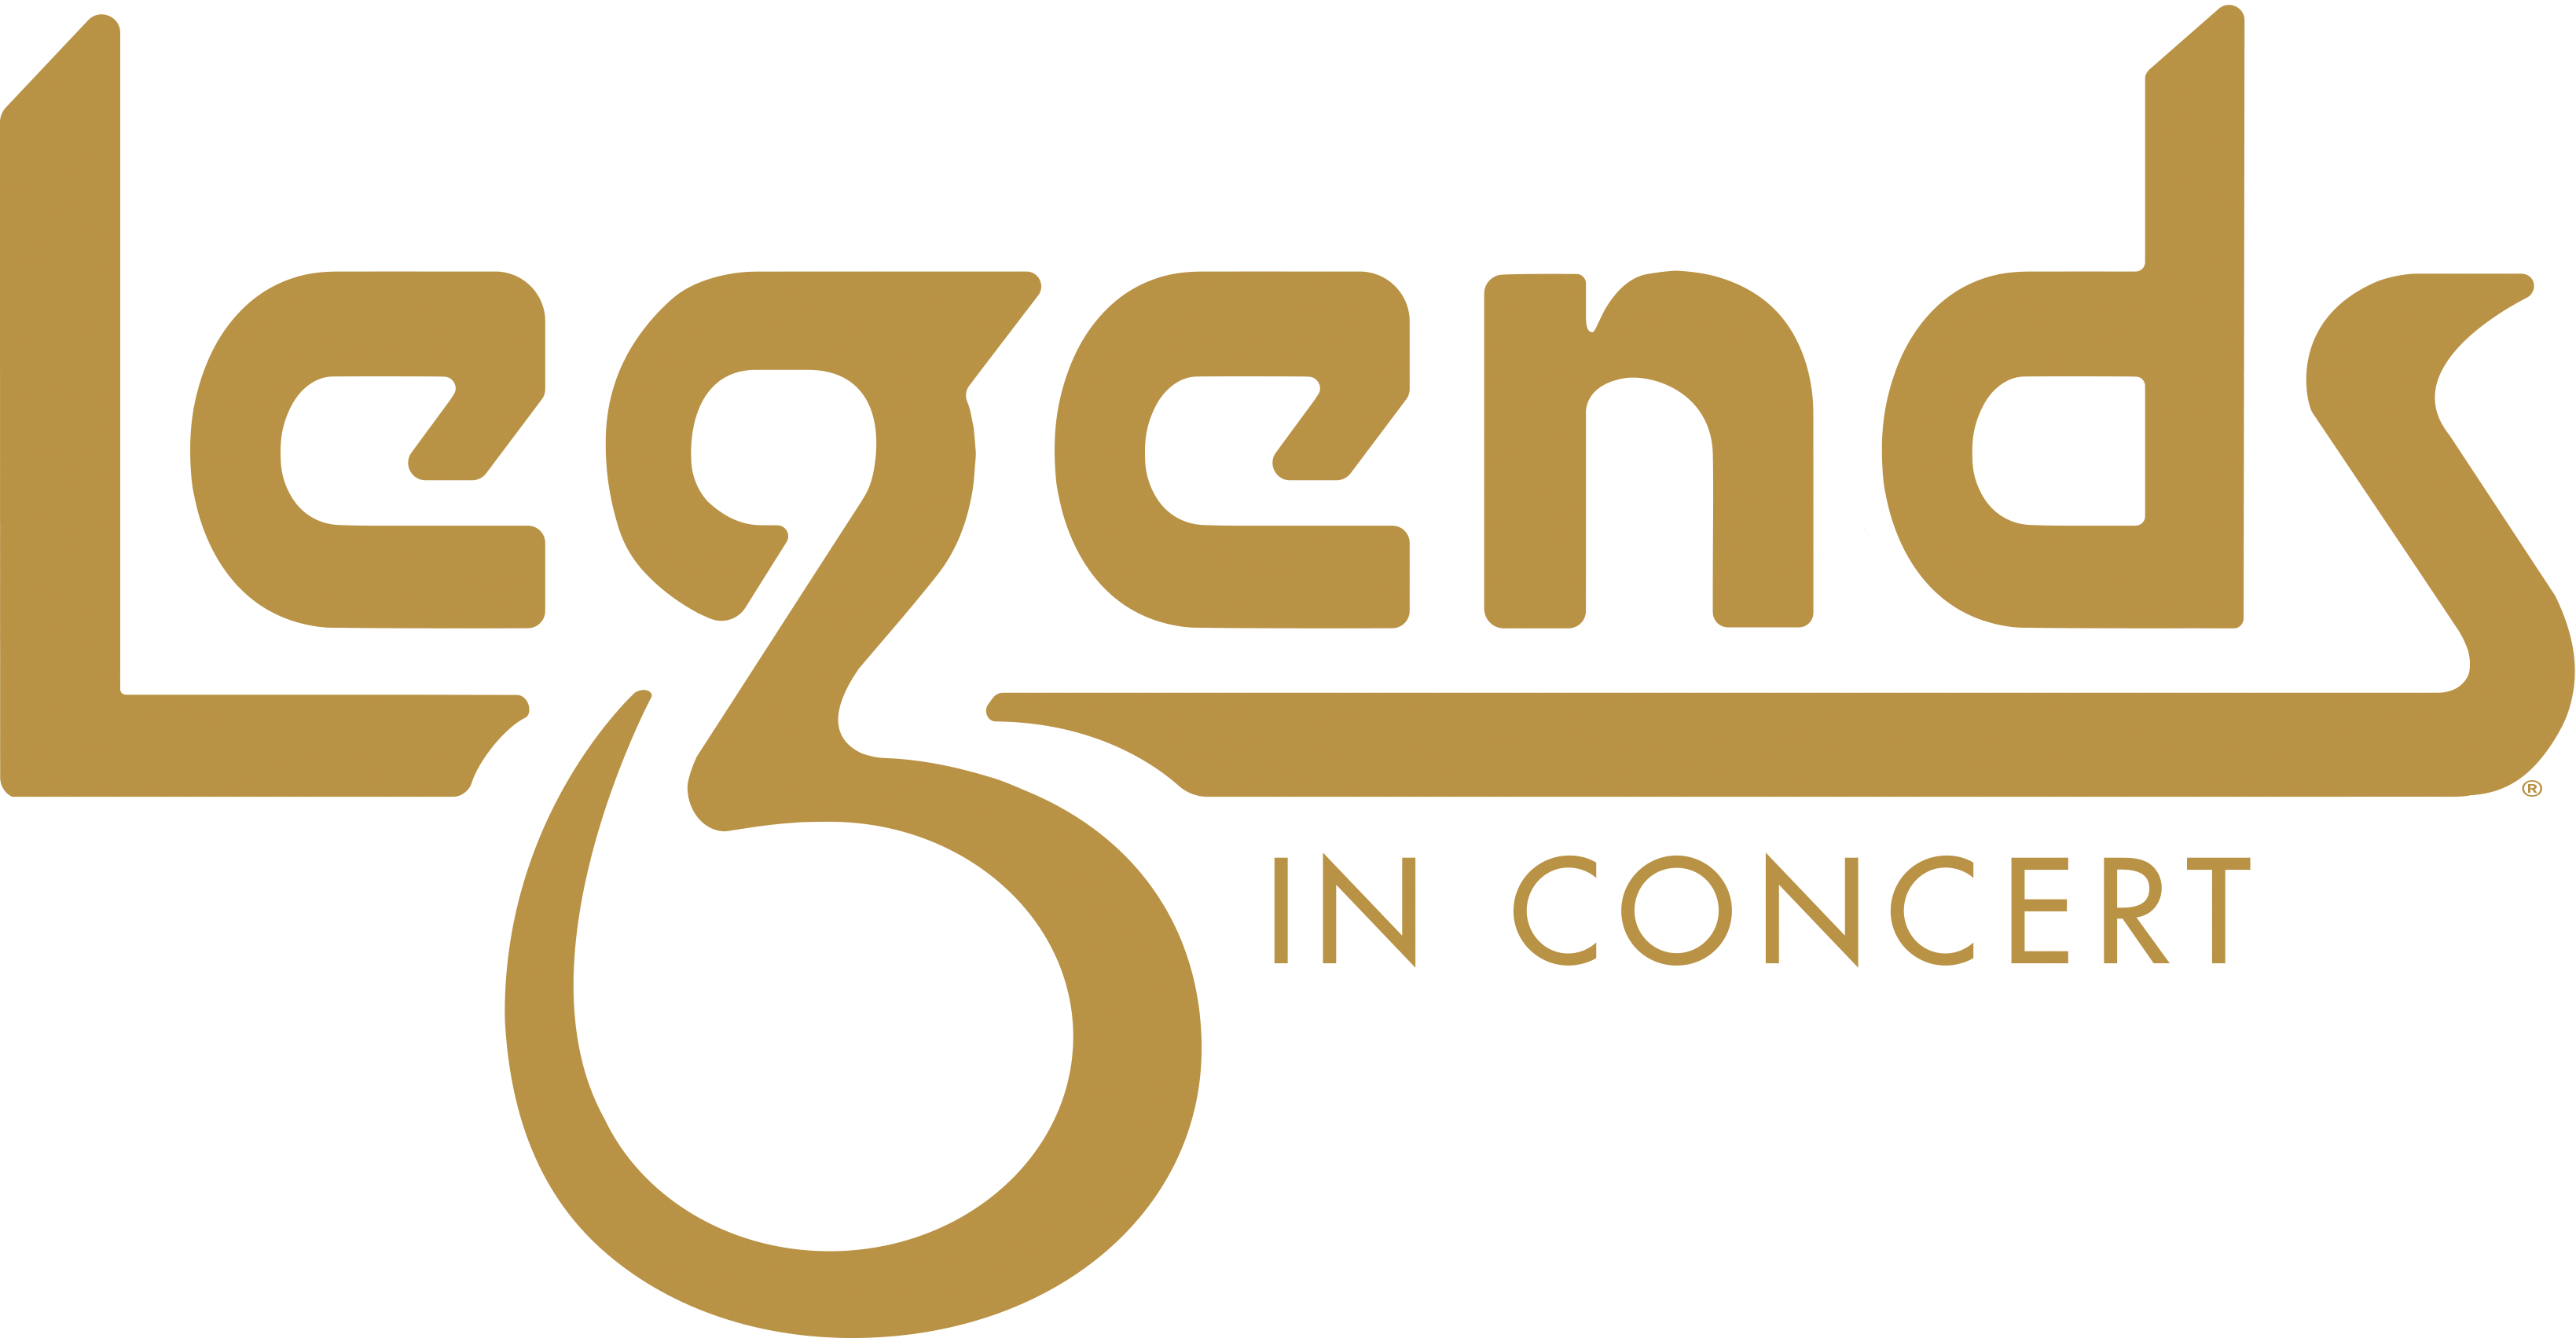 Legends_Logo_4c-1.png
